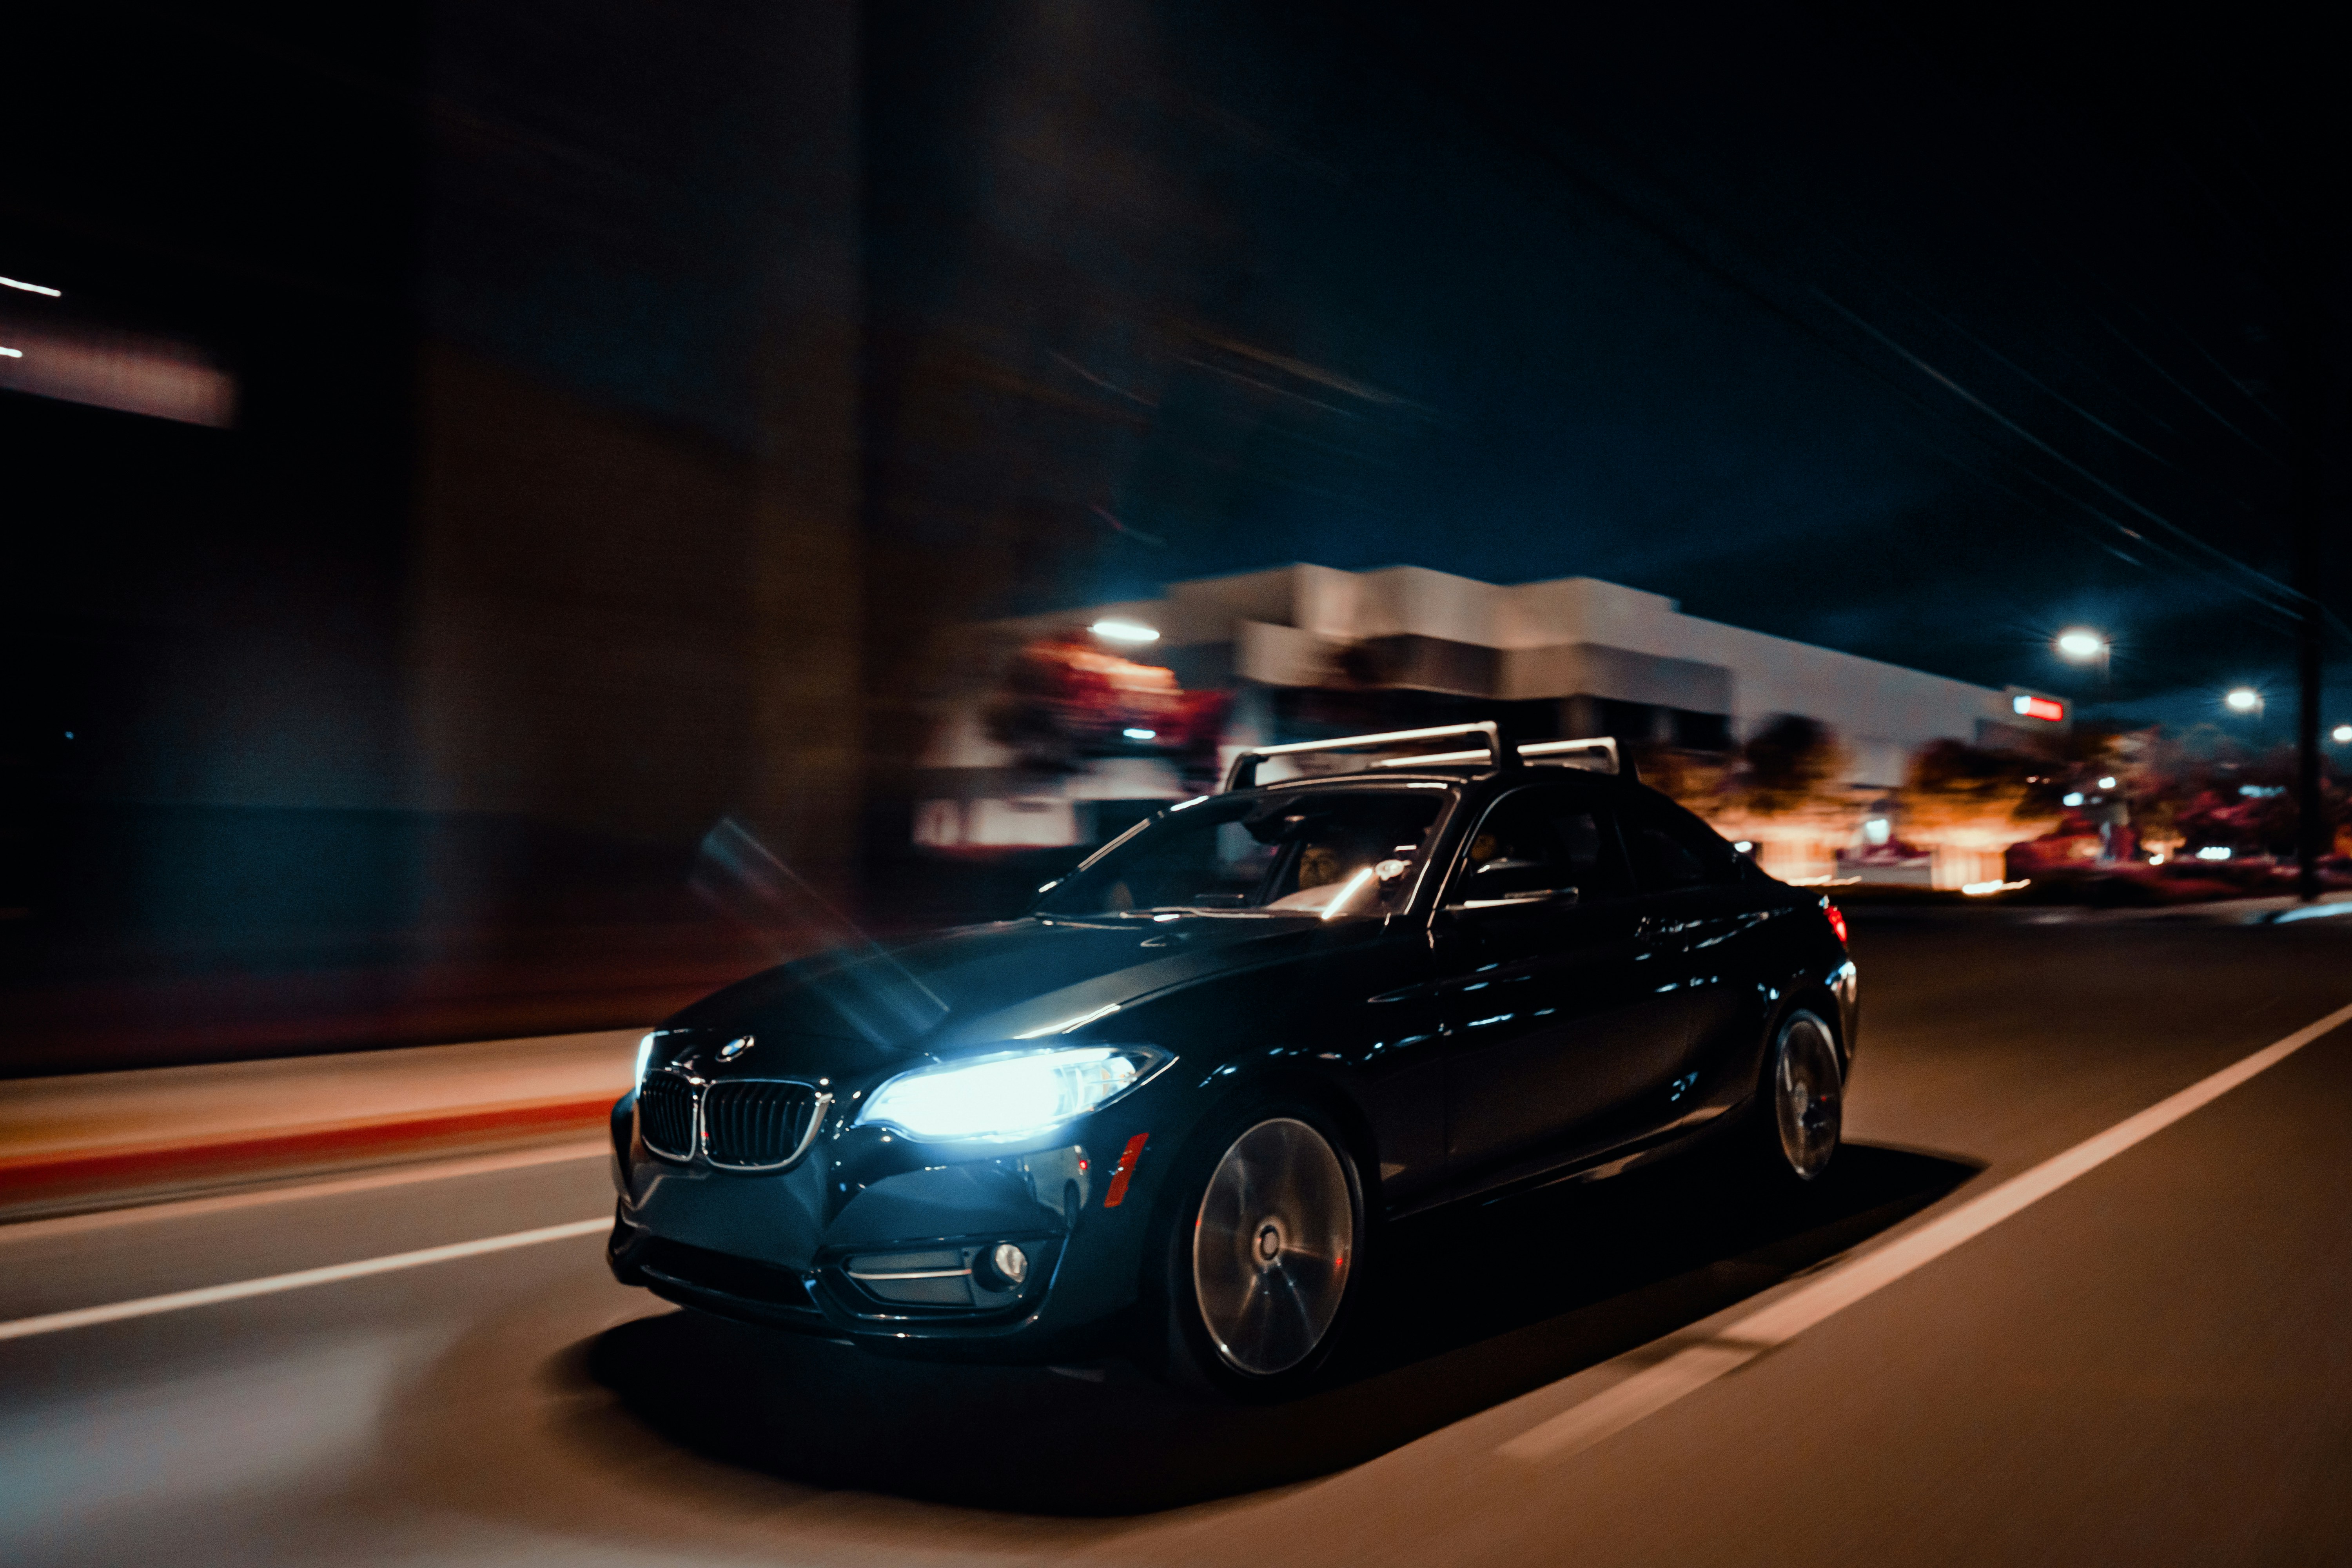 2016 BMW 228i, Night Car Photography